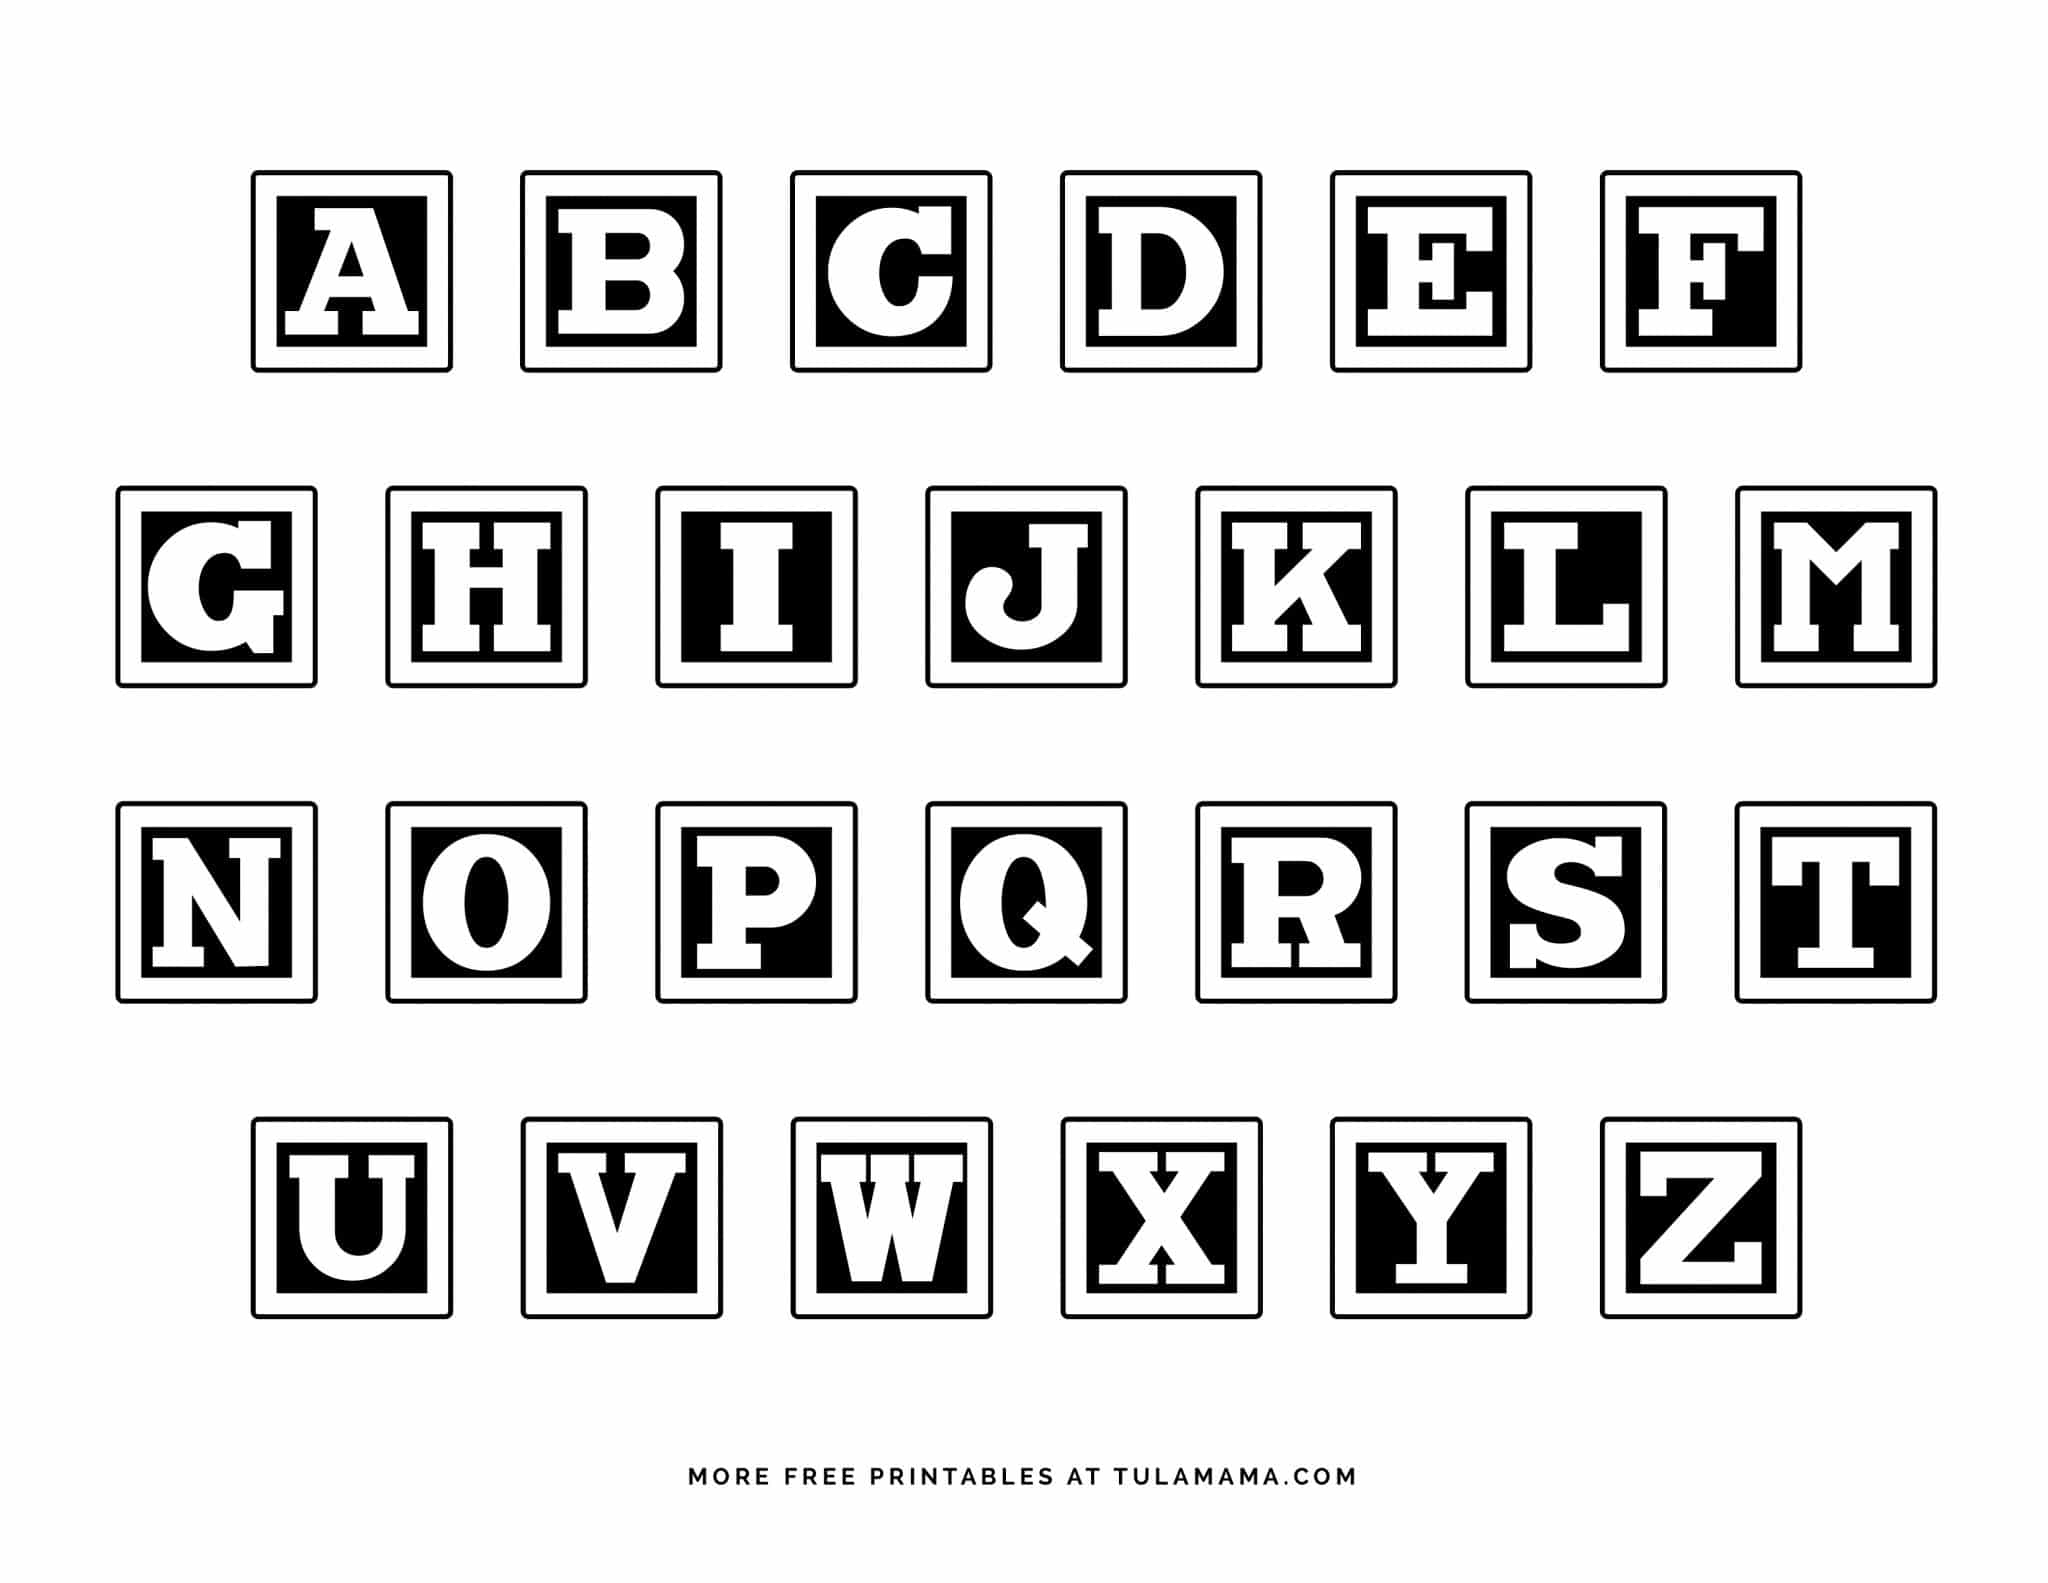 Free Printable Alphabet Blocks & Coloring Pages   Tulamama